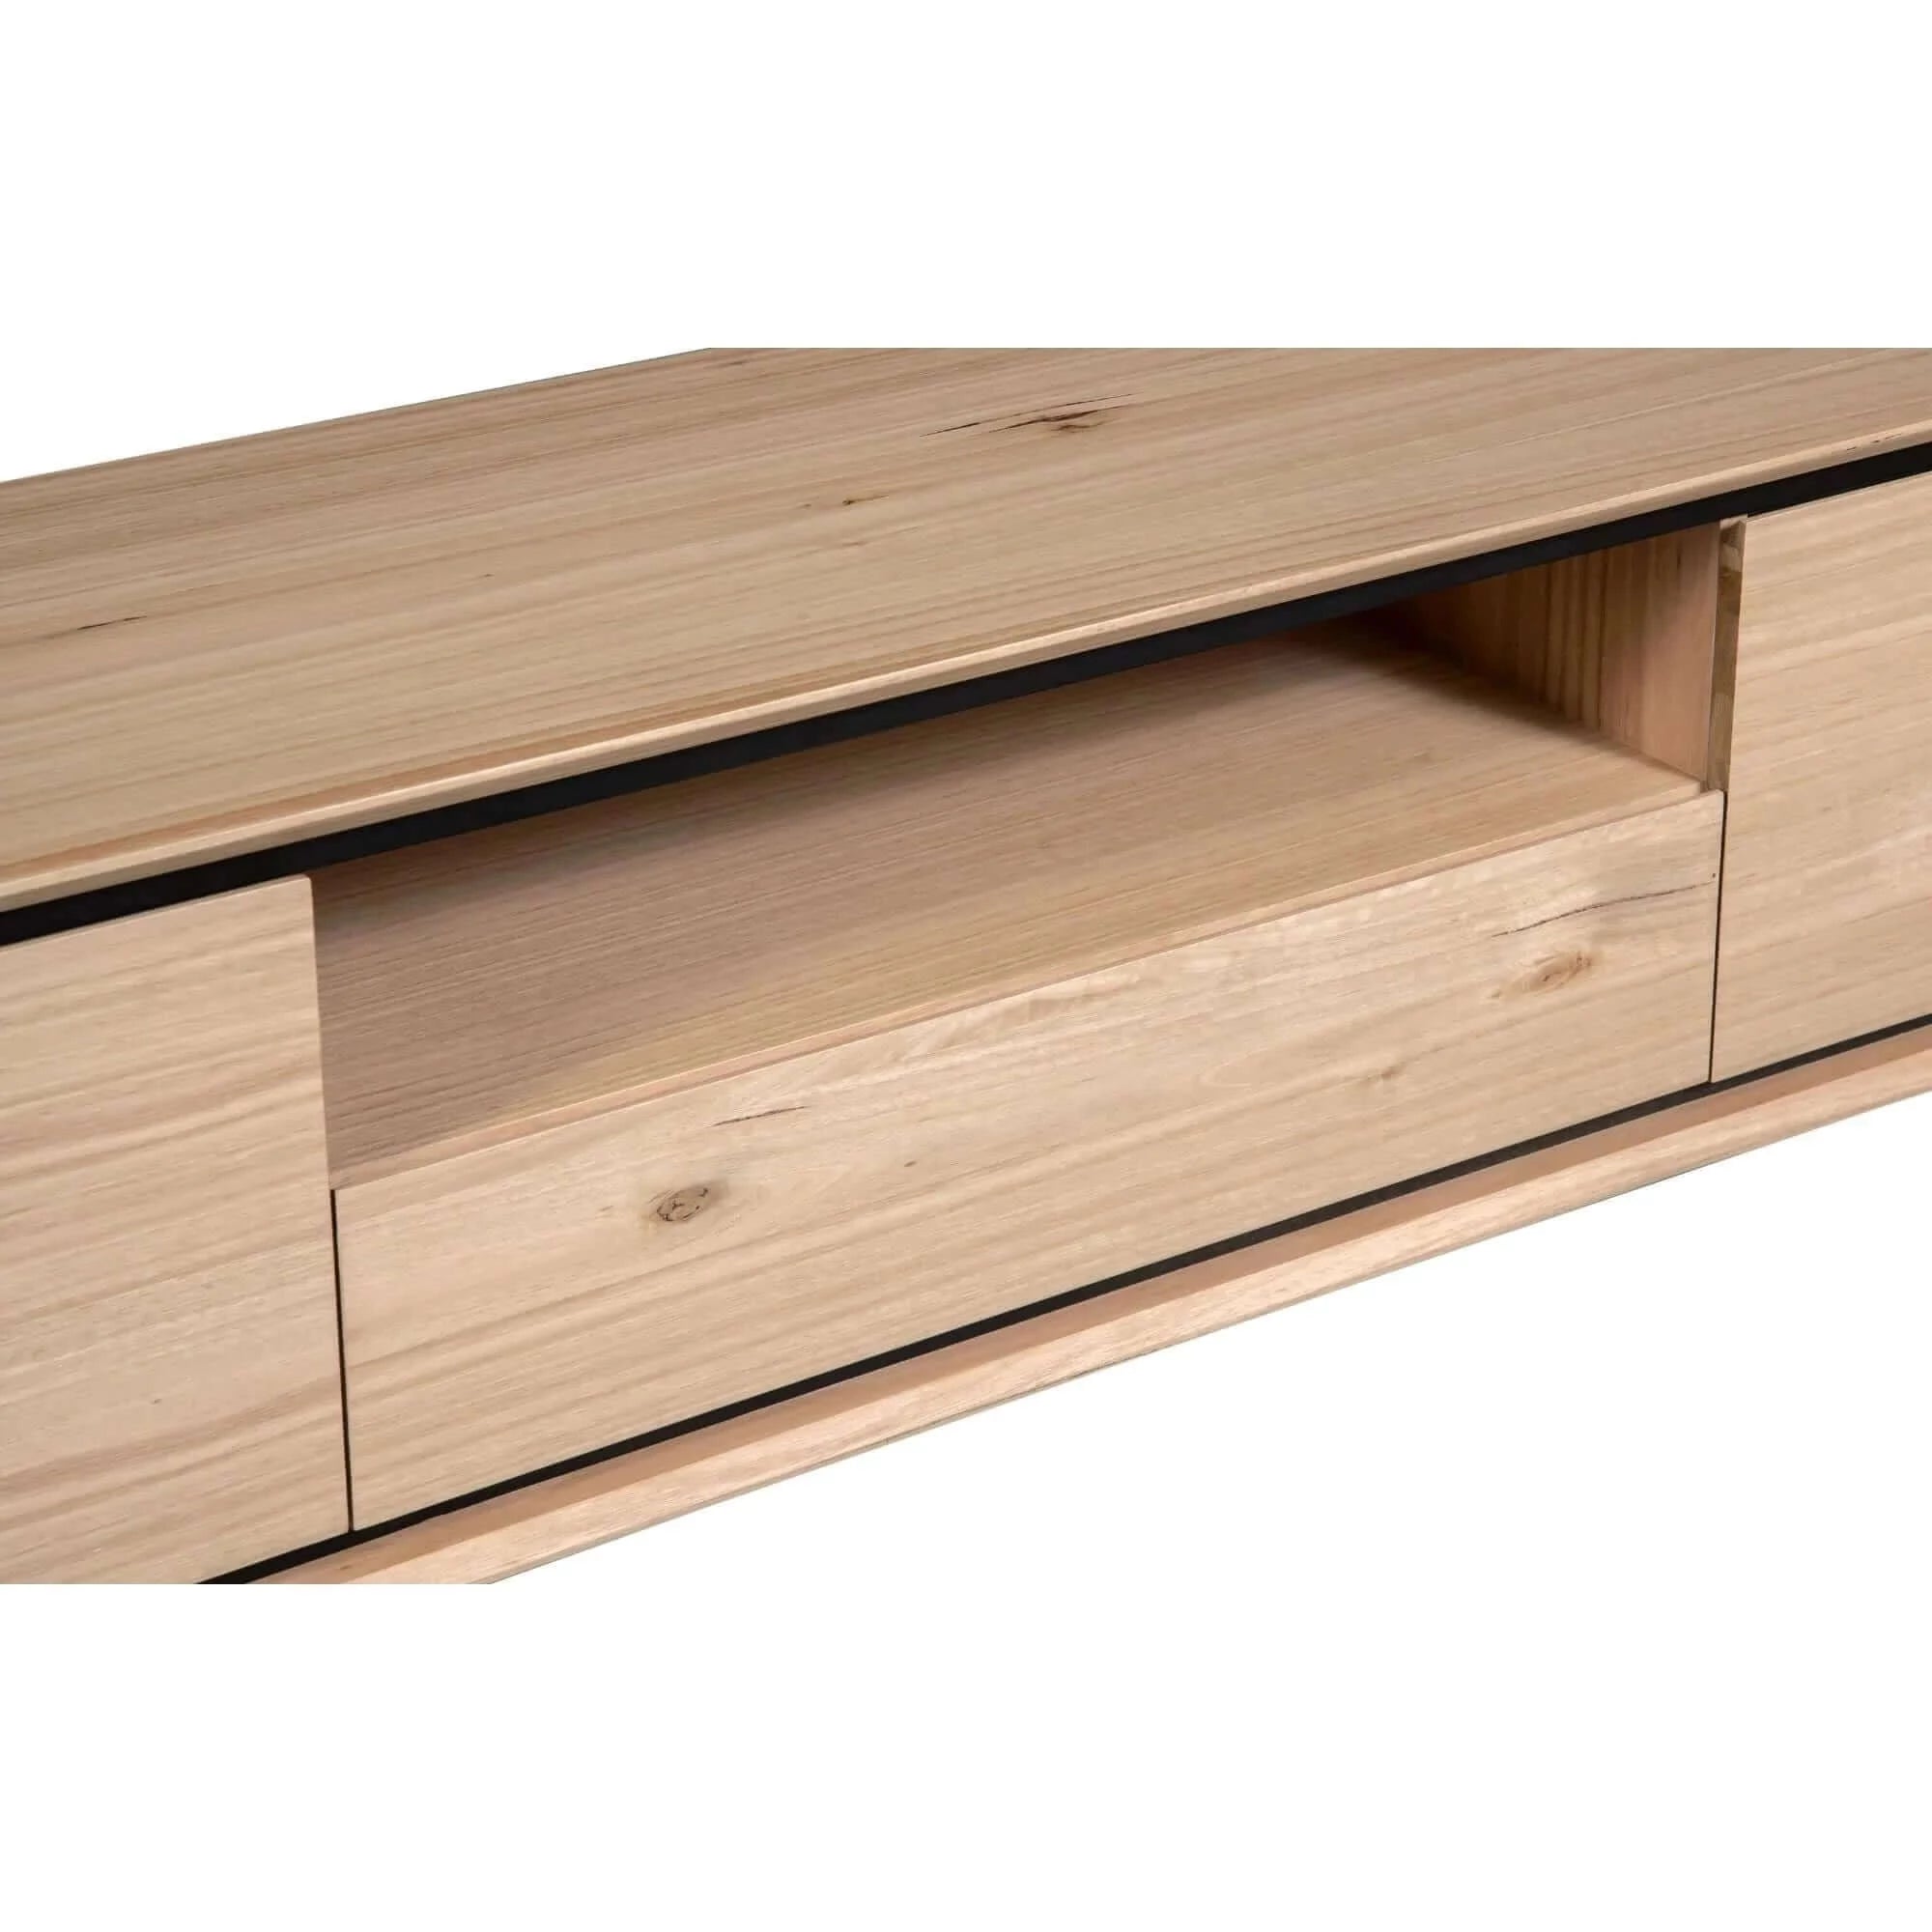 Buy Aconite ETU Entertainment TV Unit 210cm Solid Messmate Timber Wood-Upinteriors